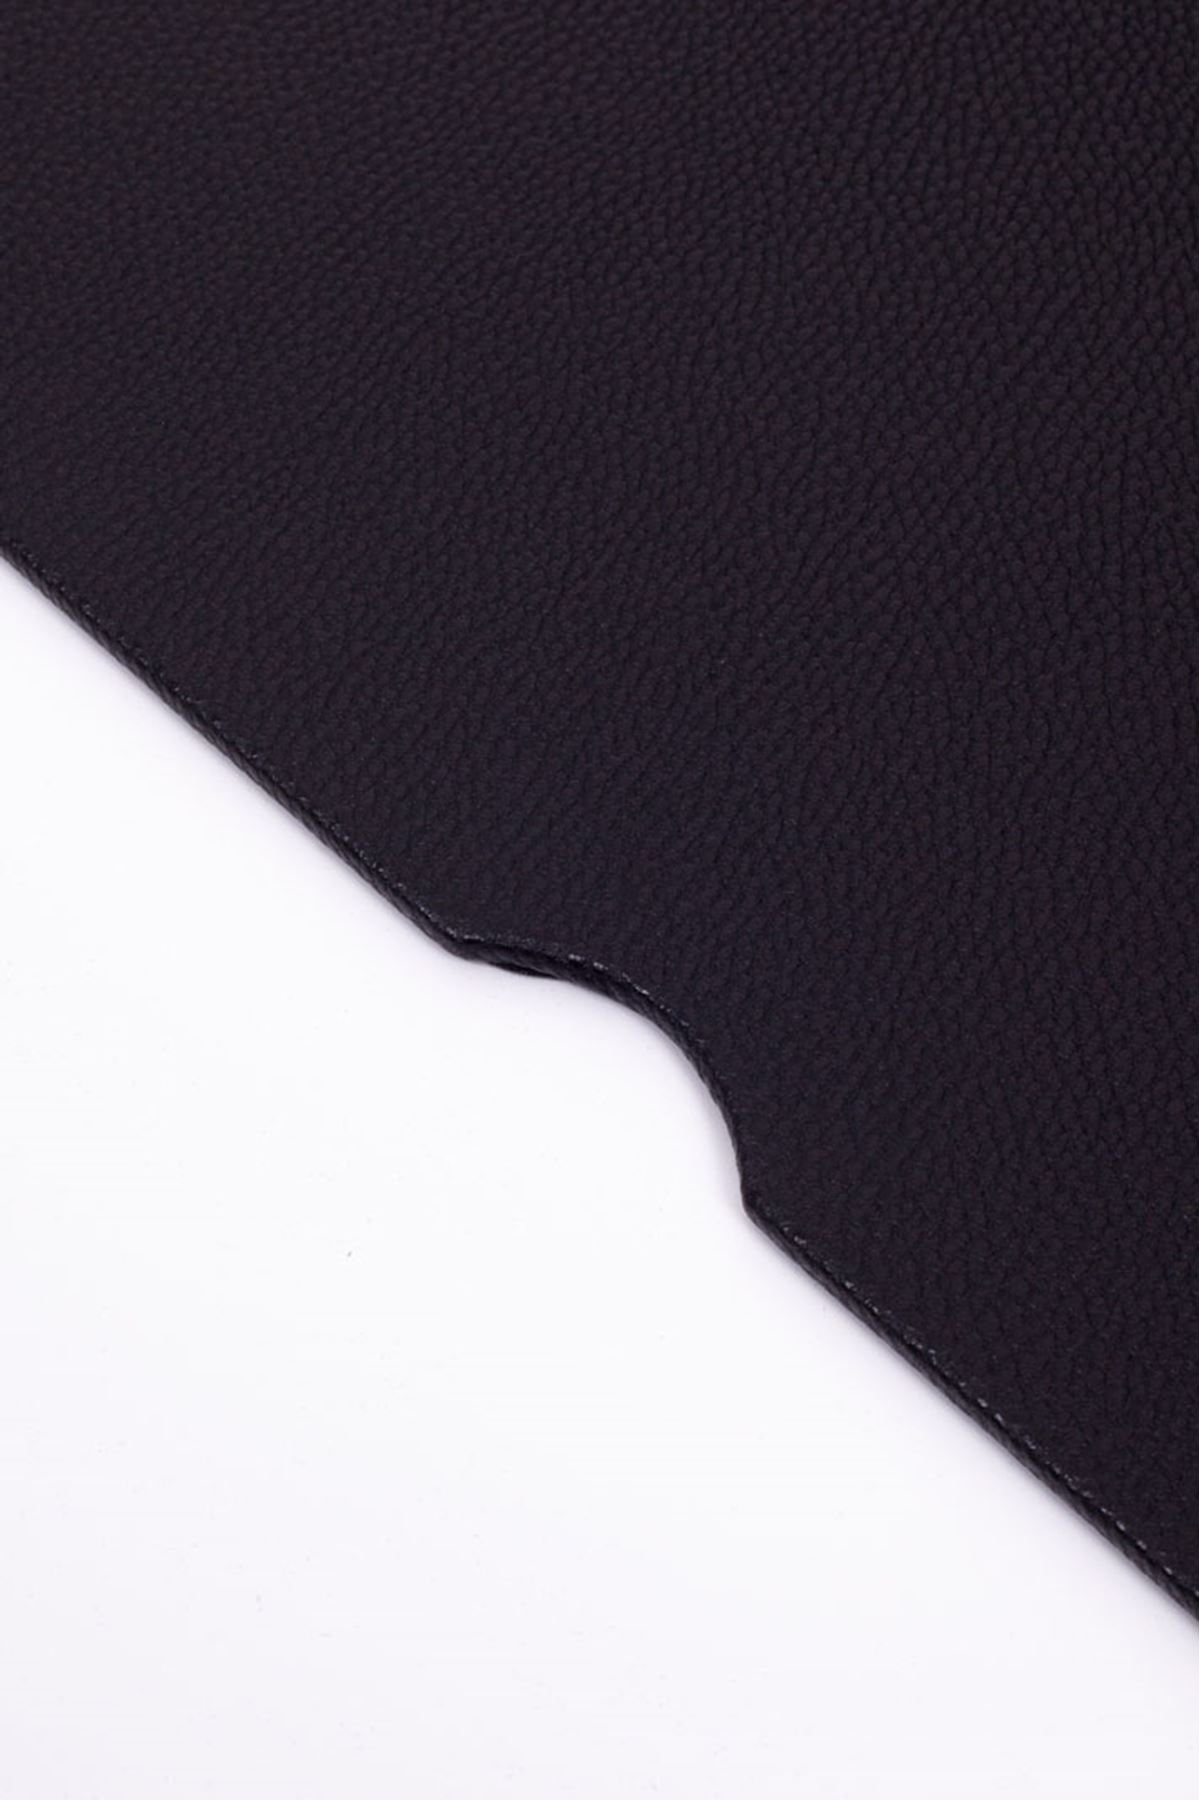 Deri Kapaklı Masa Sümeni Siyah Ahşap Detaylı 50x35cm